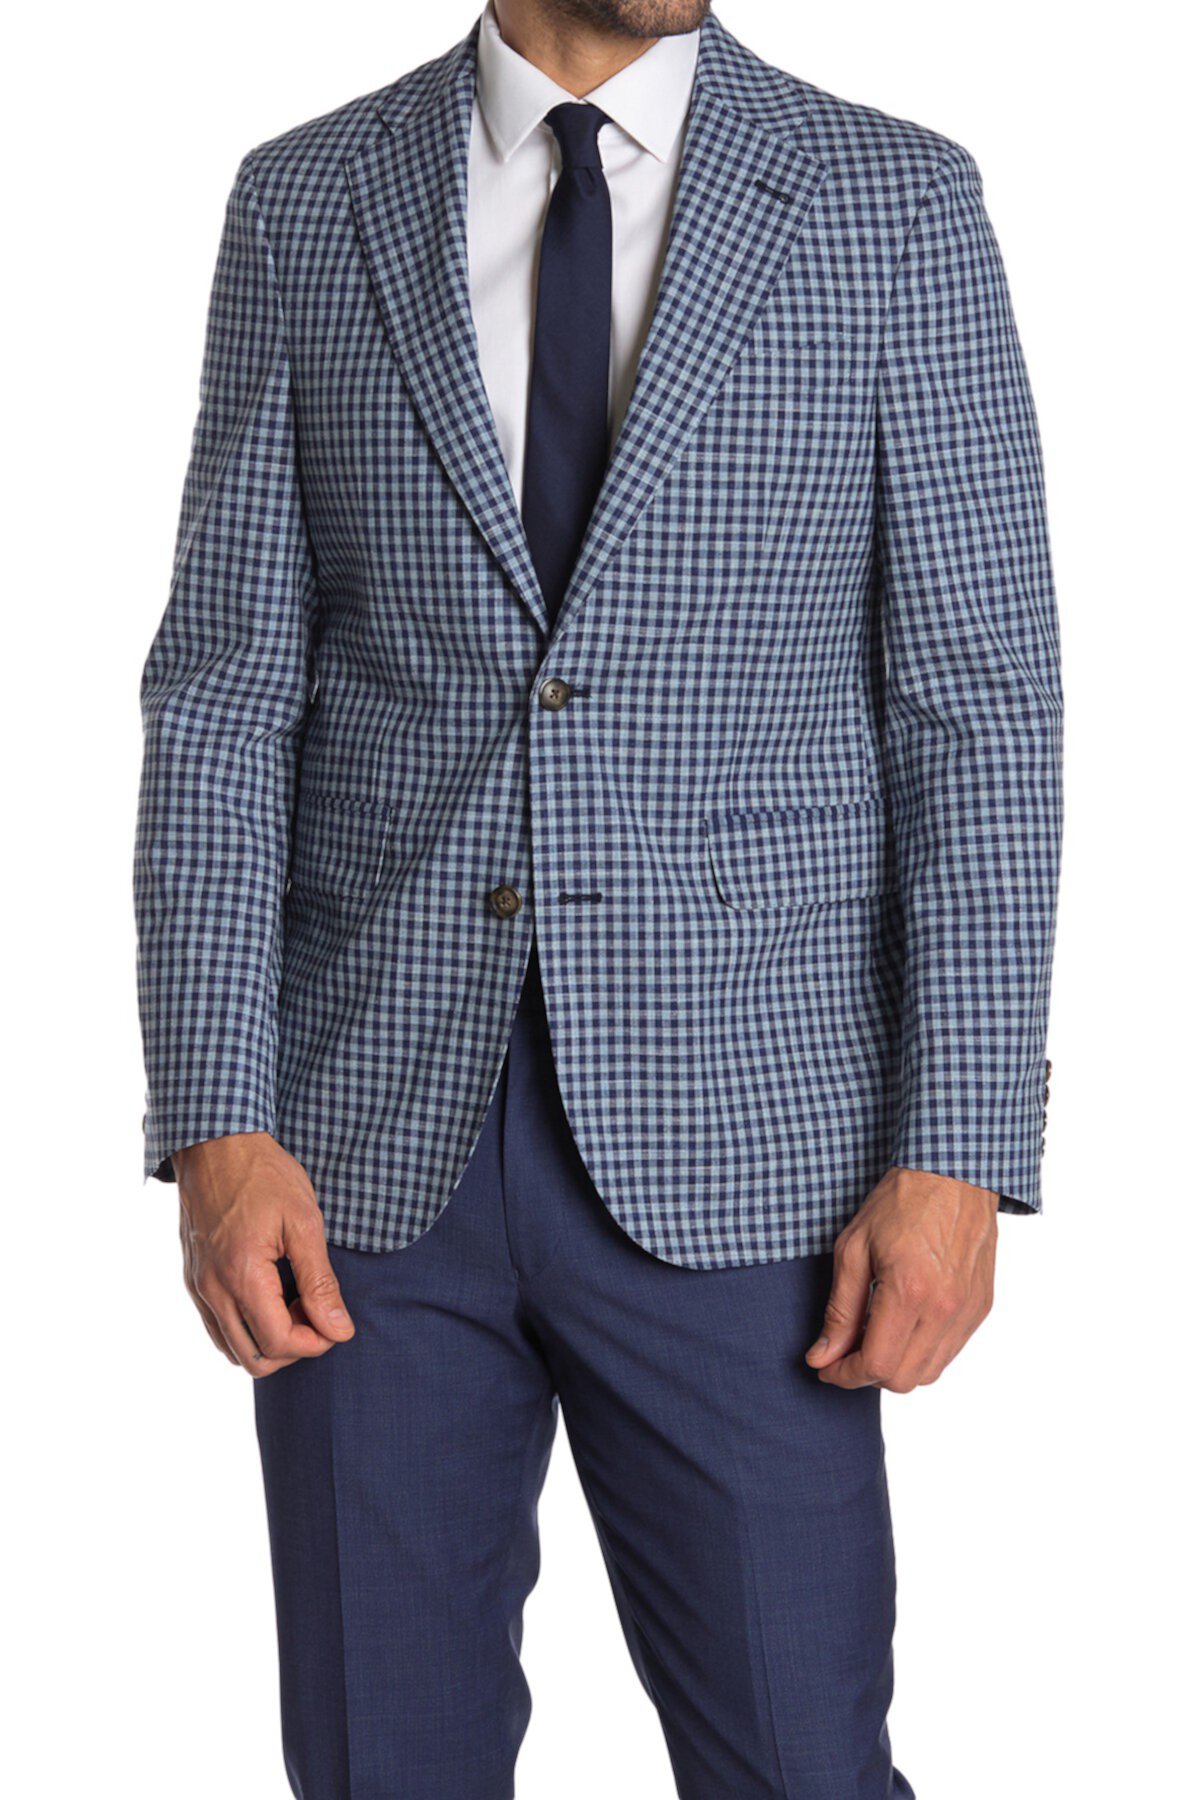 Blue Gingham Check Two Button Notch Lapel Sport Coat Strong Suit